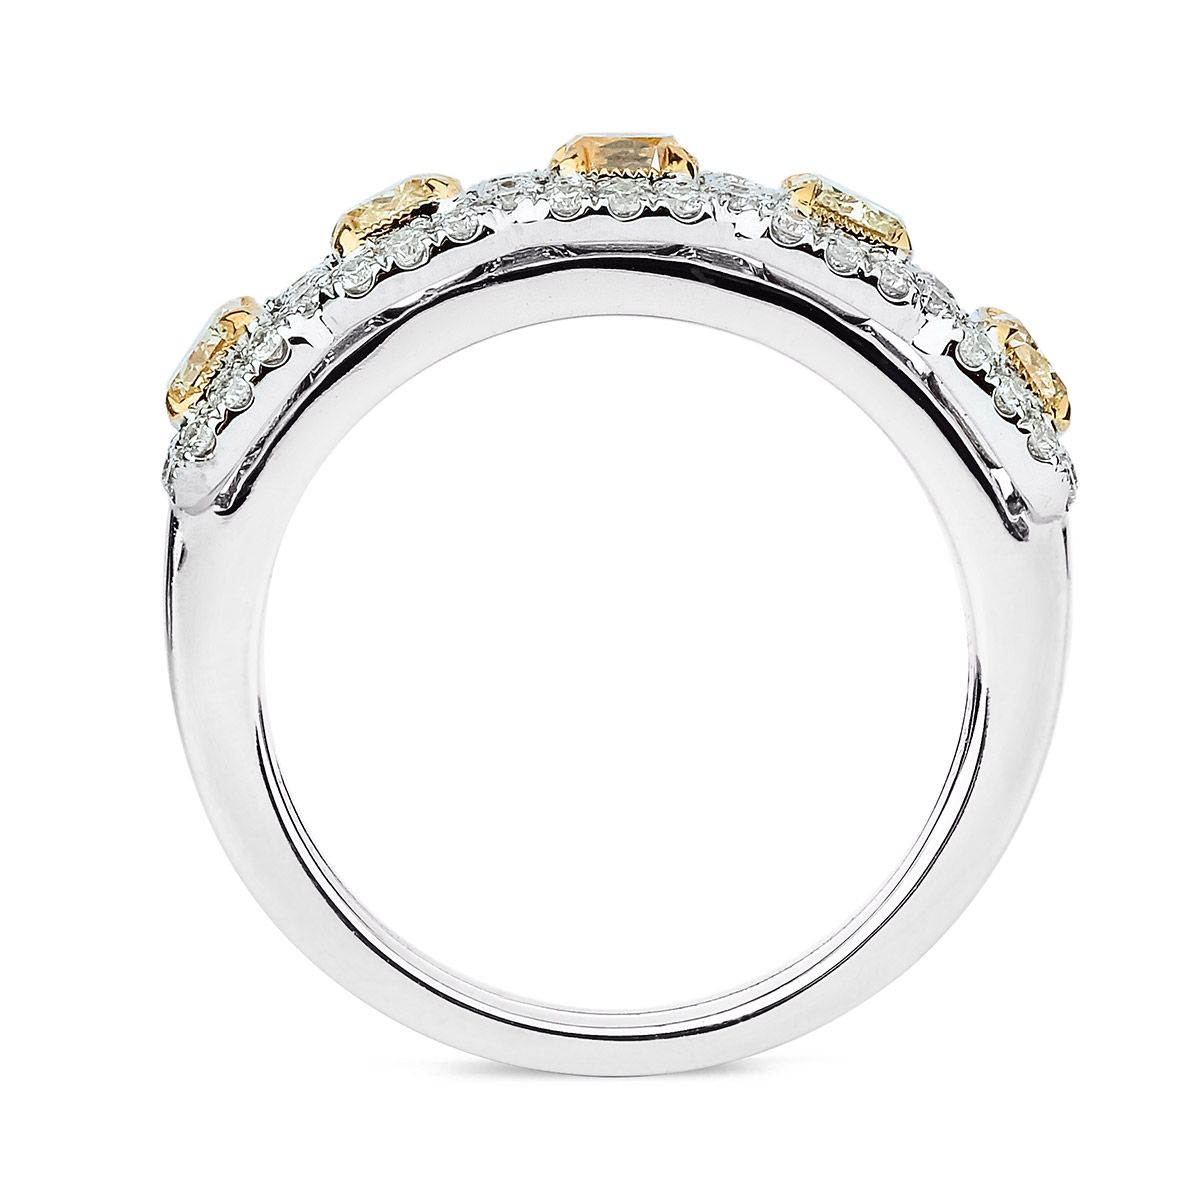 Fancy Intense Yellow Diamond Ring, 2.42 Ct. TW, Radiant shape